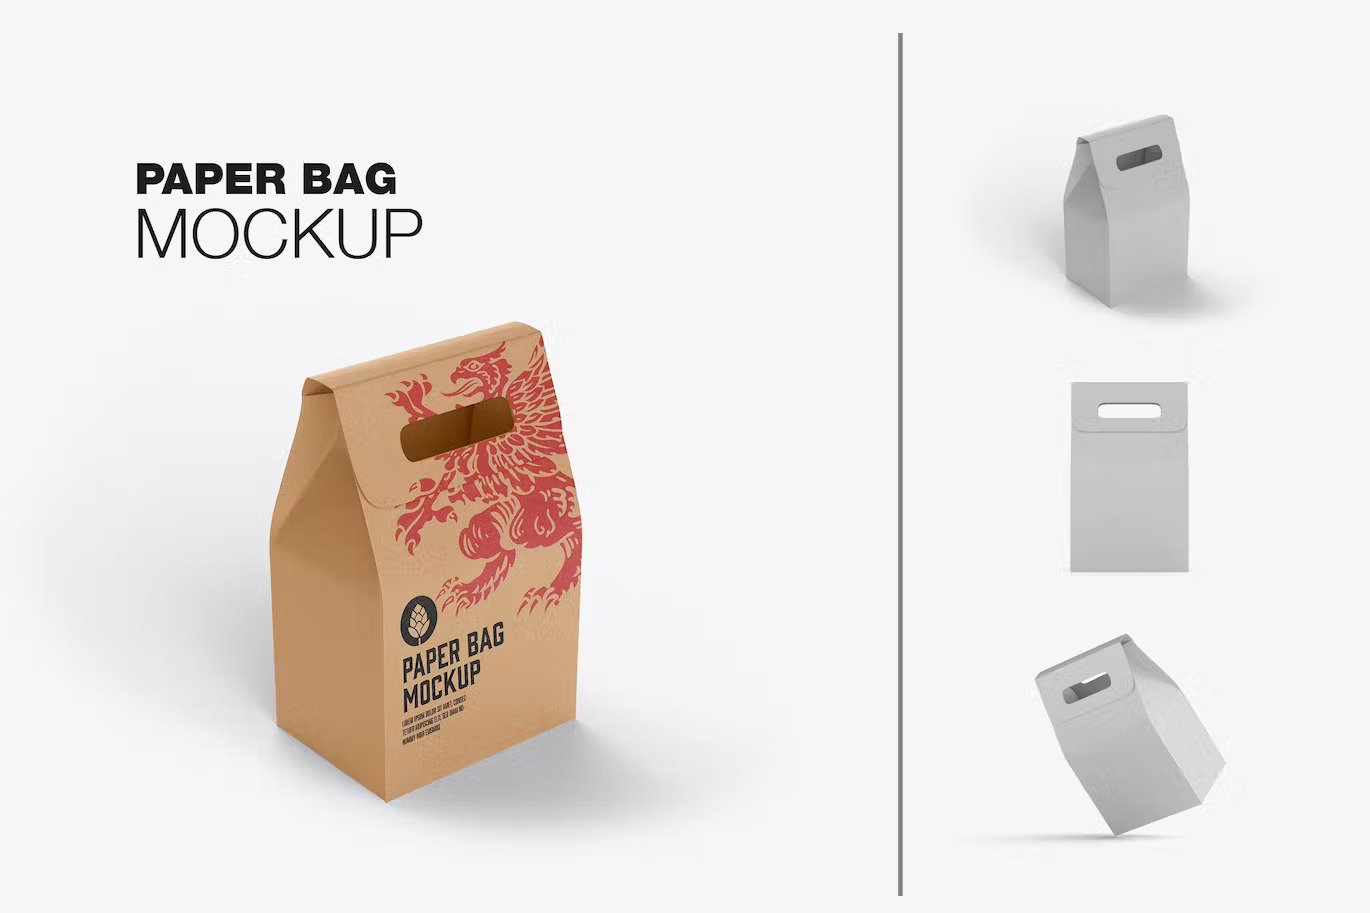 A kraft paper bag mockup template